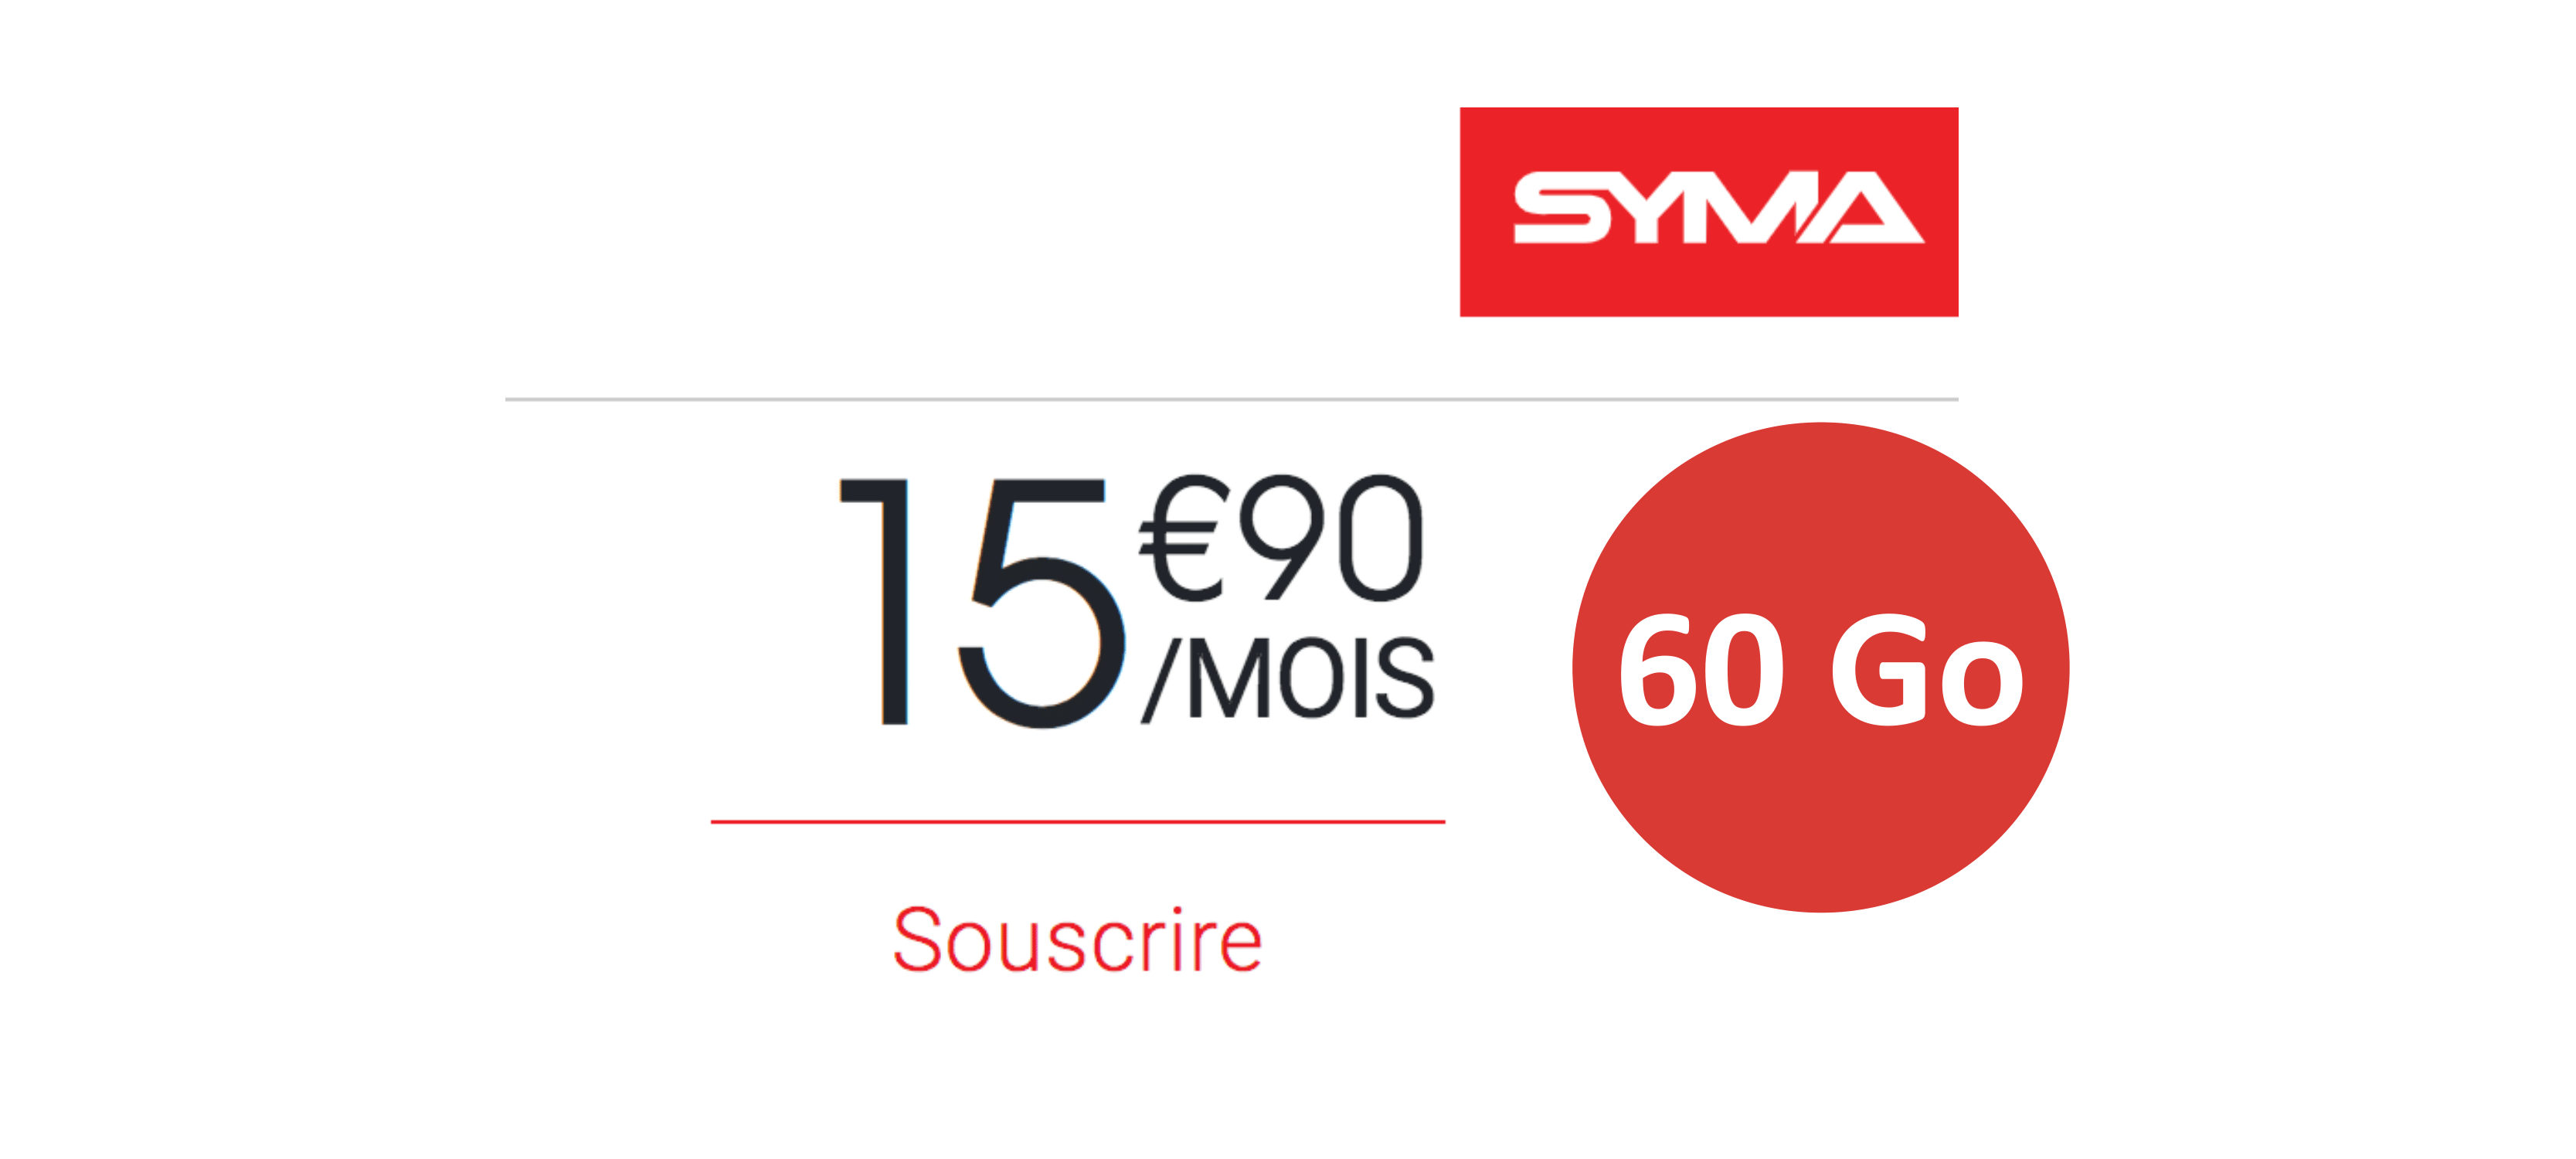 Syma forfait mobile 60Go pas cher